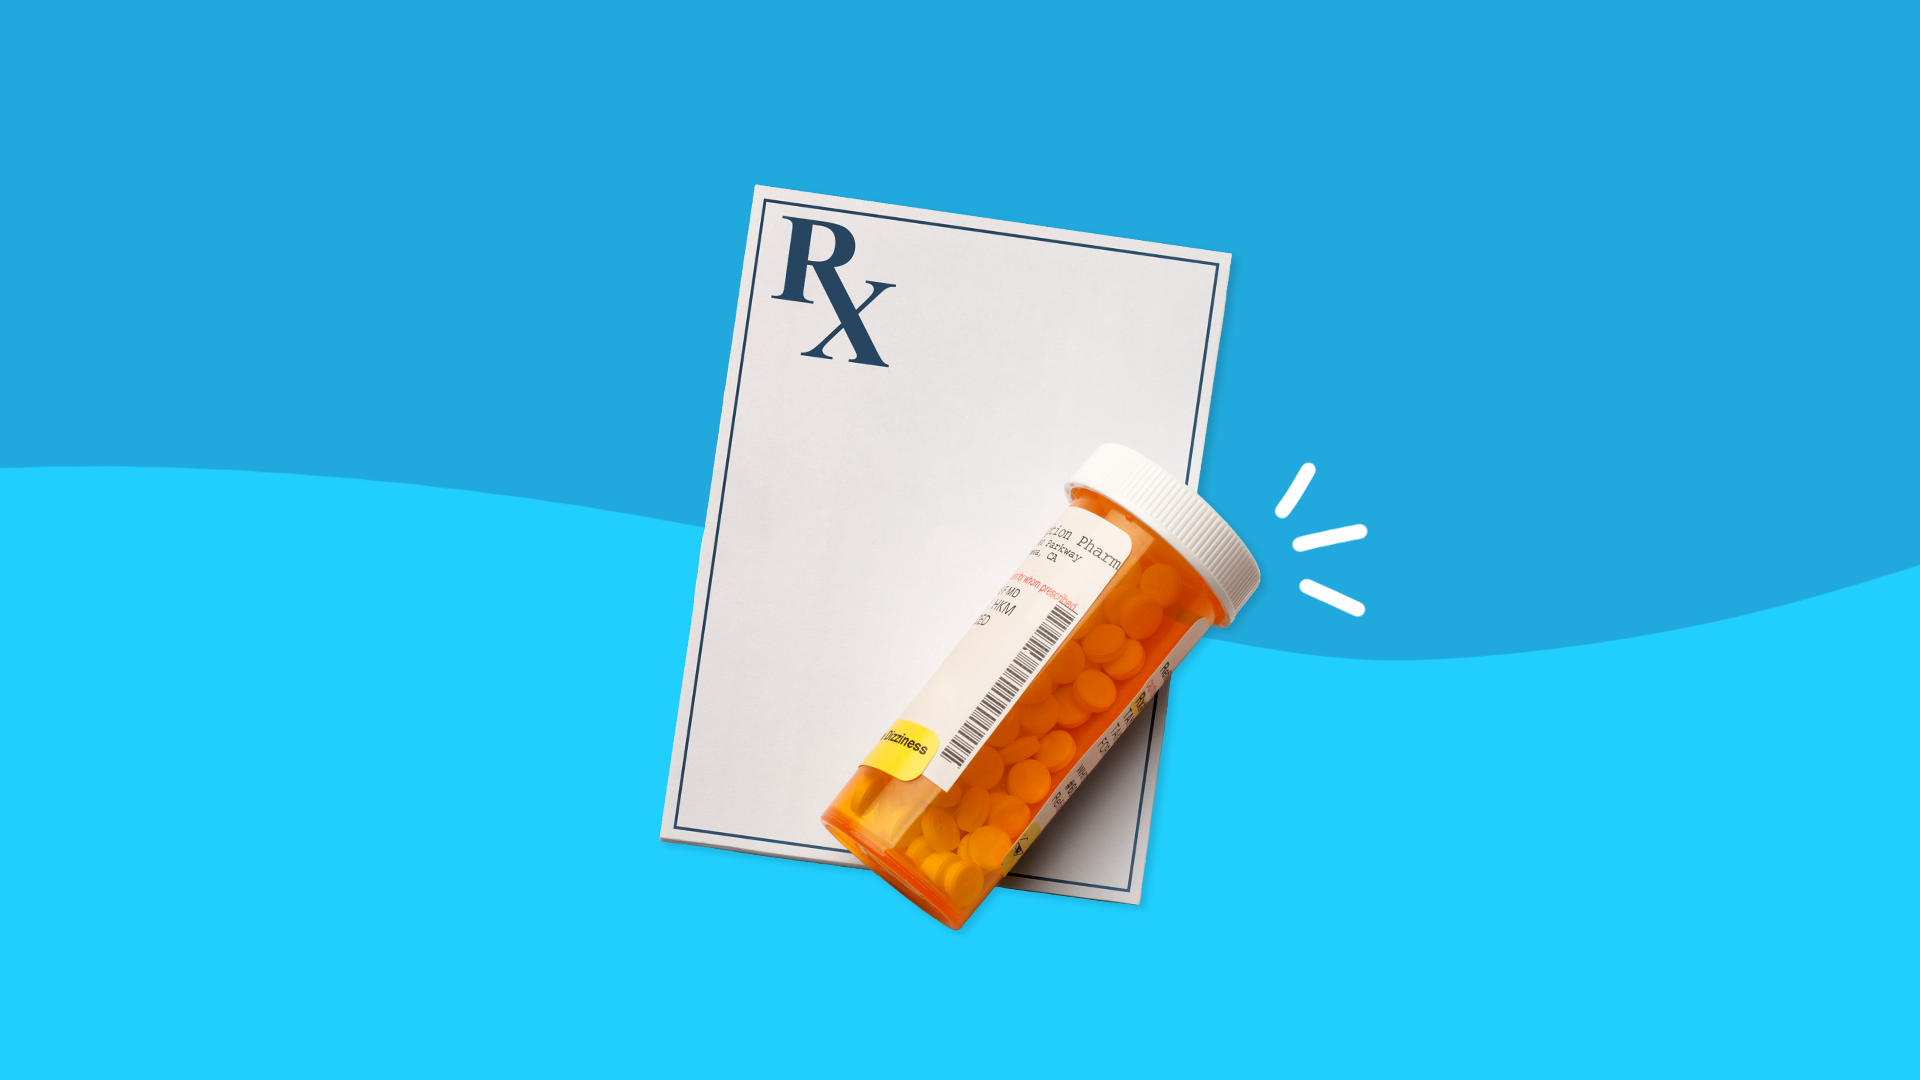 Prescription pad and bottle: Celebrex side effects